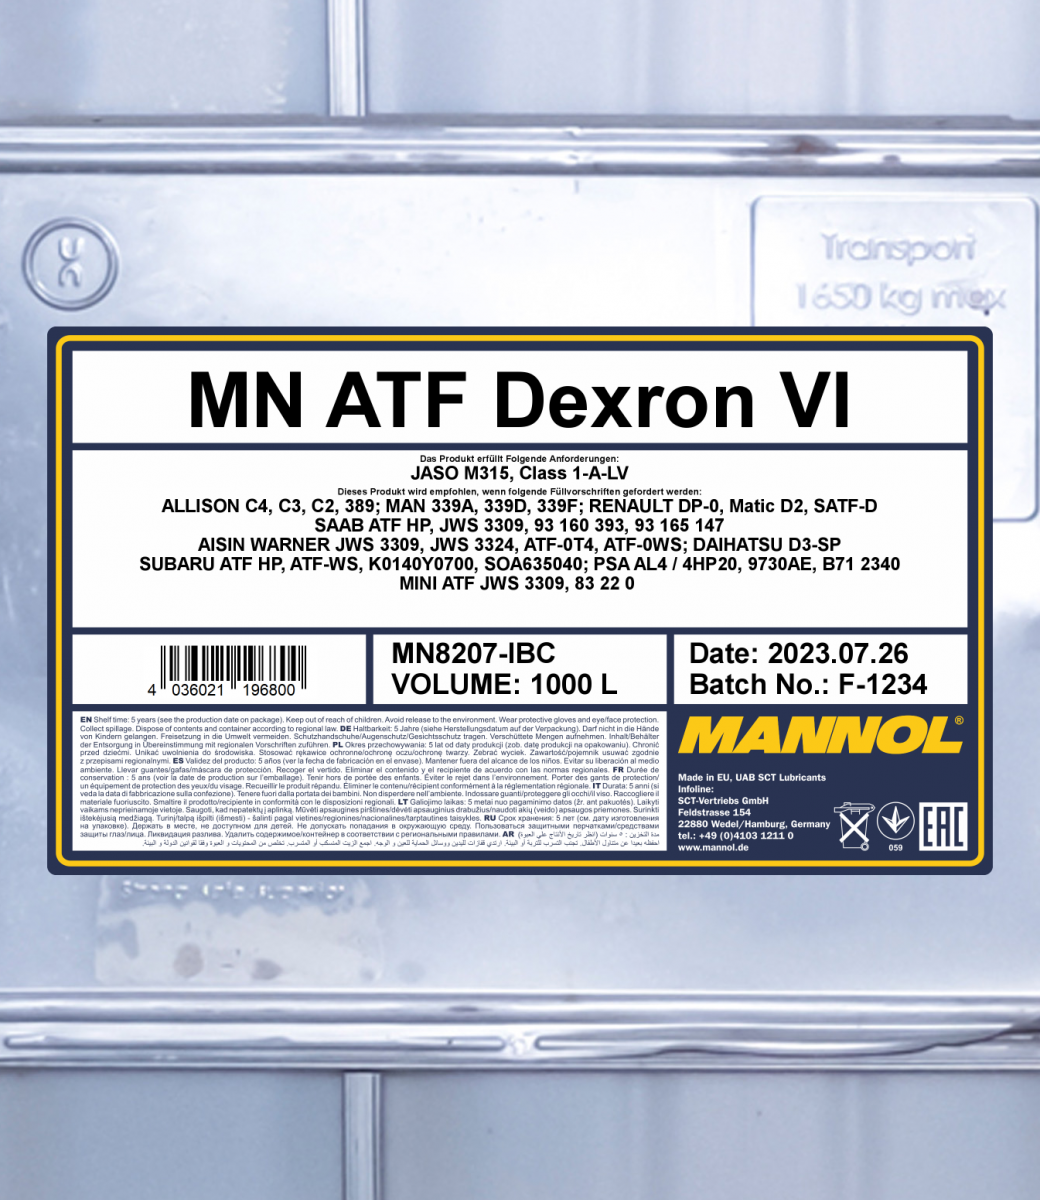 Mannol 20L Automatic Transmission Fluid Dexron VI Ford Mercon LV